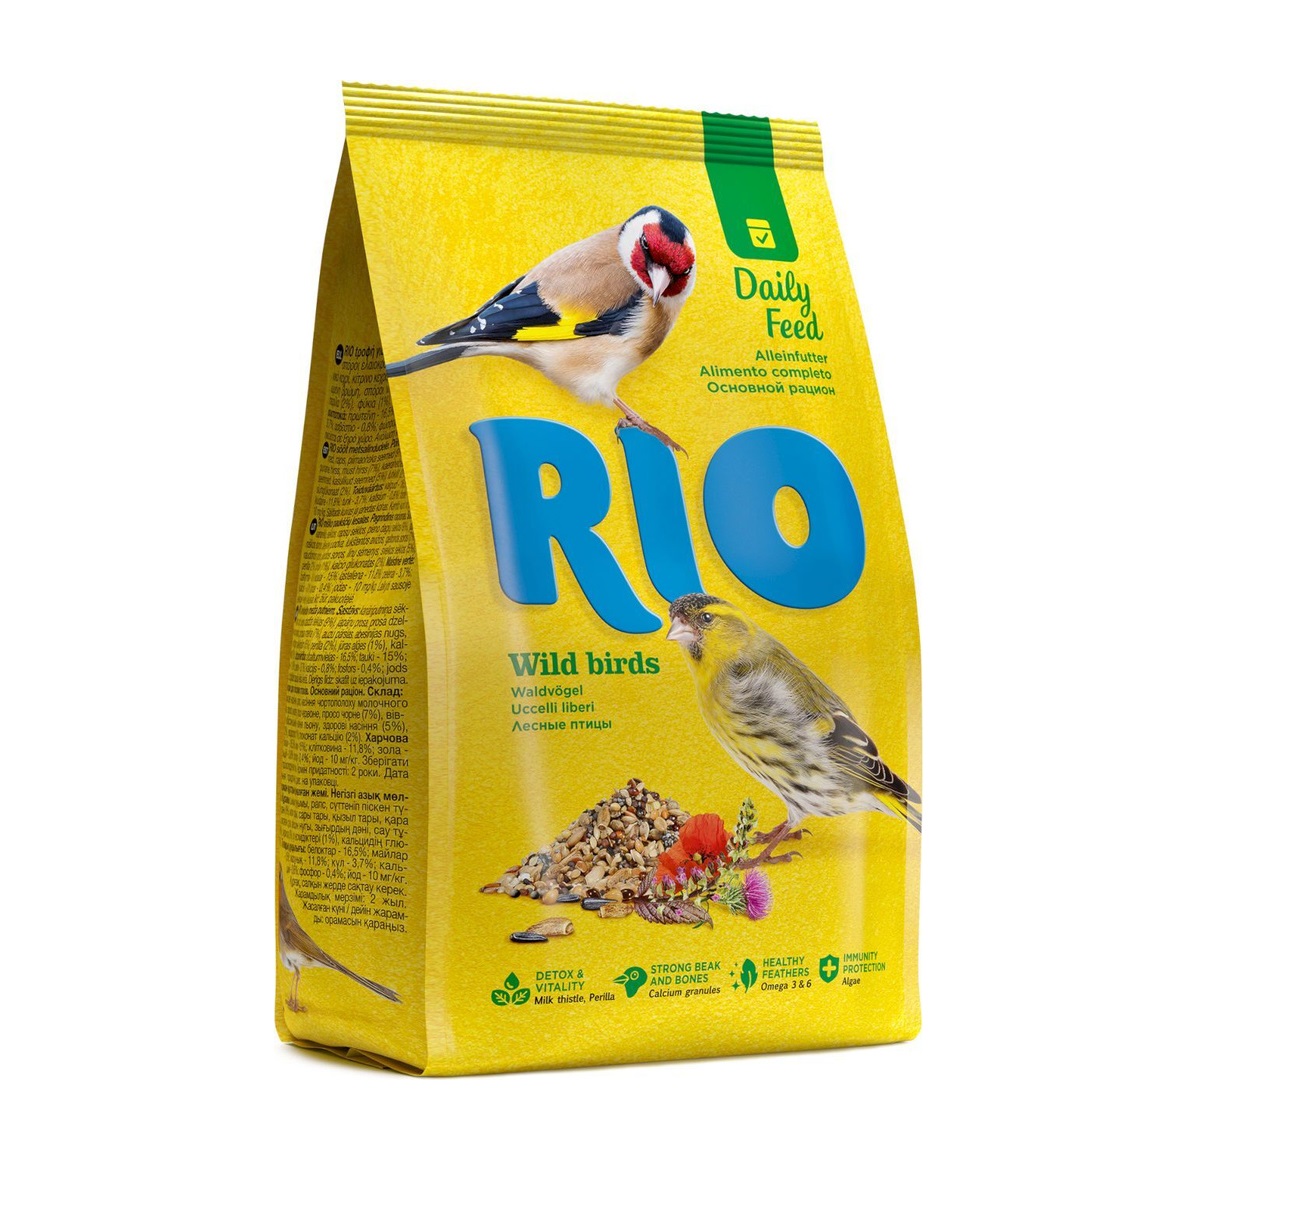 Рио 500гр - для лесных певчих птиц (Rio) + Подарок